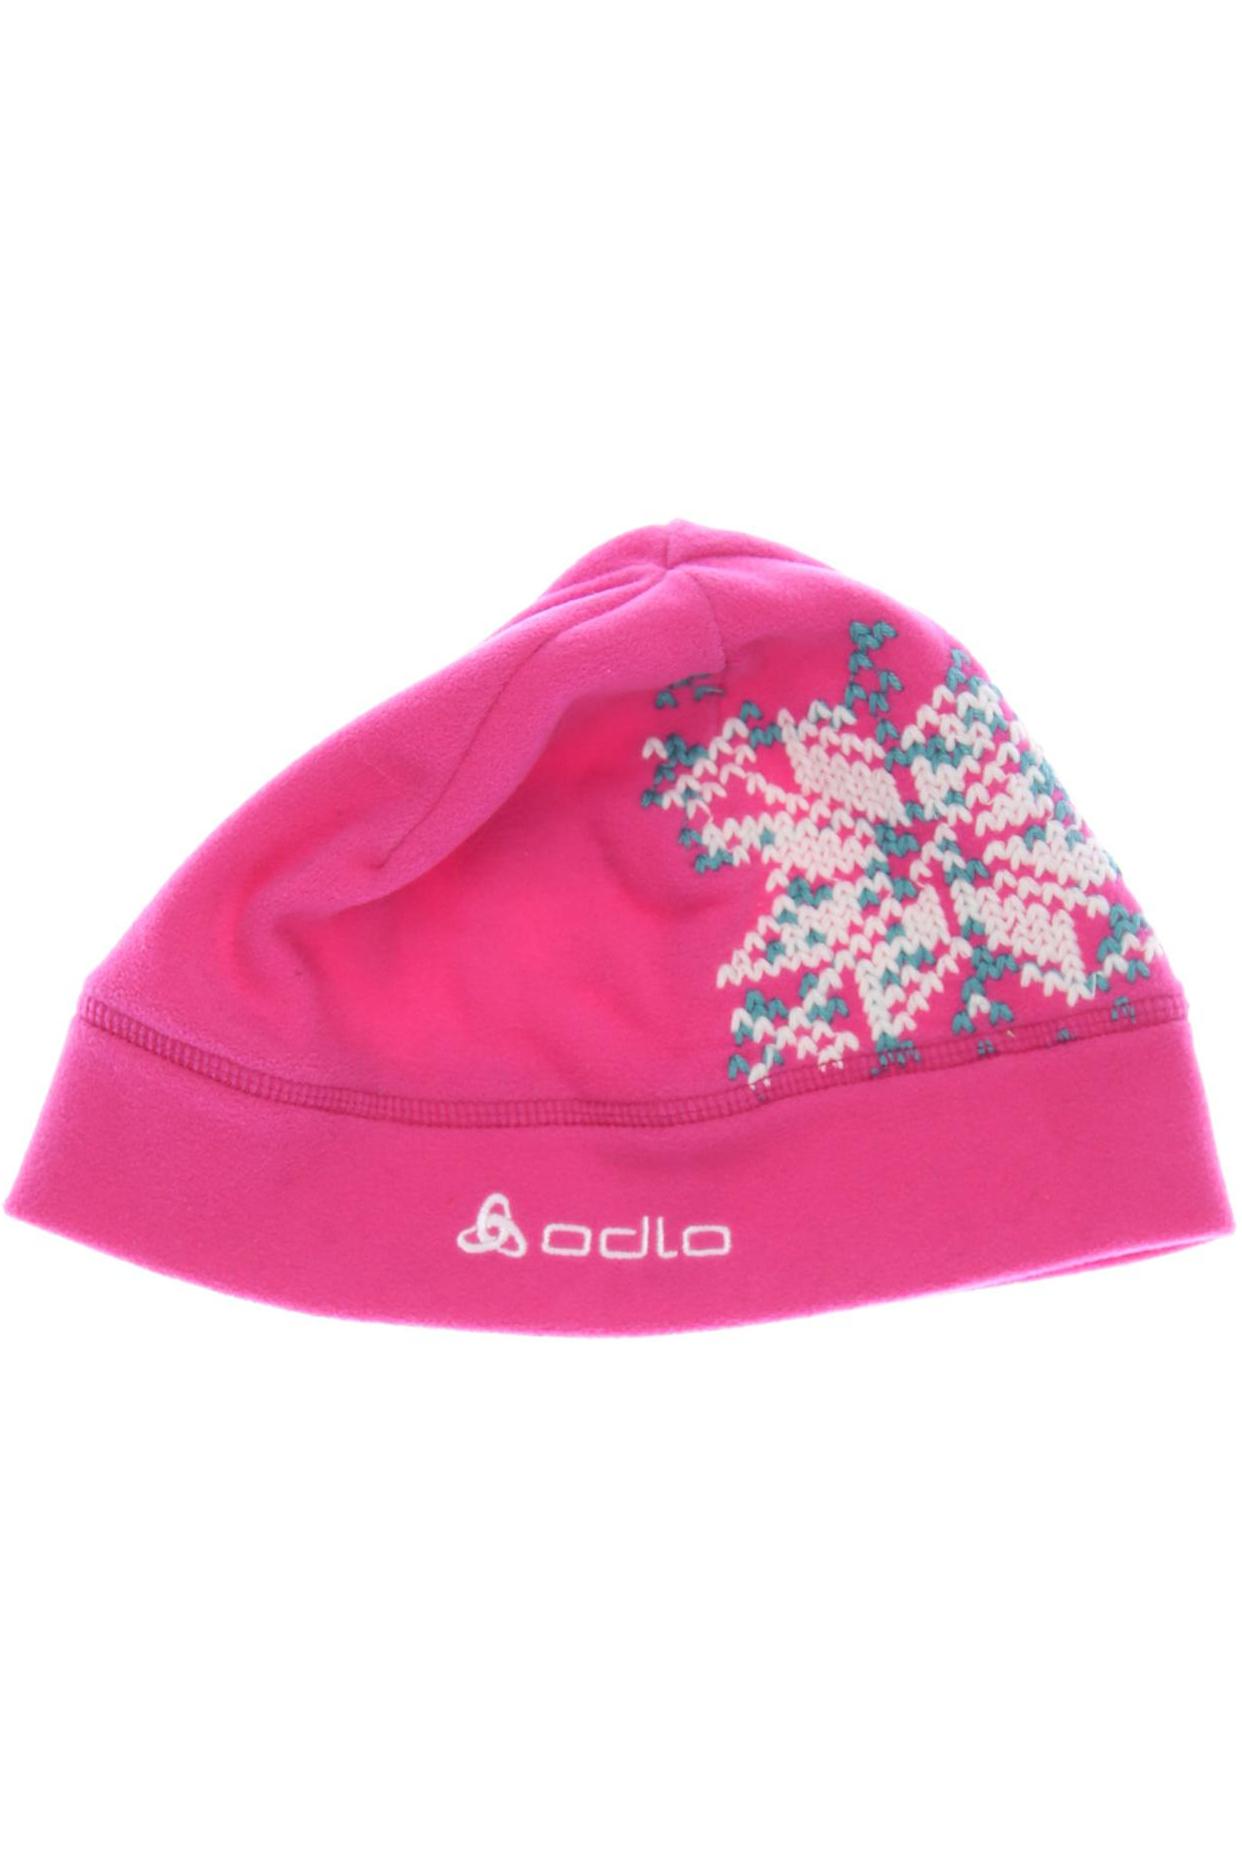 Odlo Damen Hut/Mütze, pink, Gr. 58 von Odlo